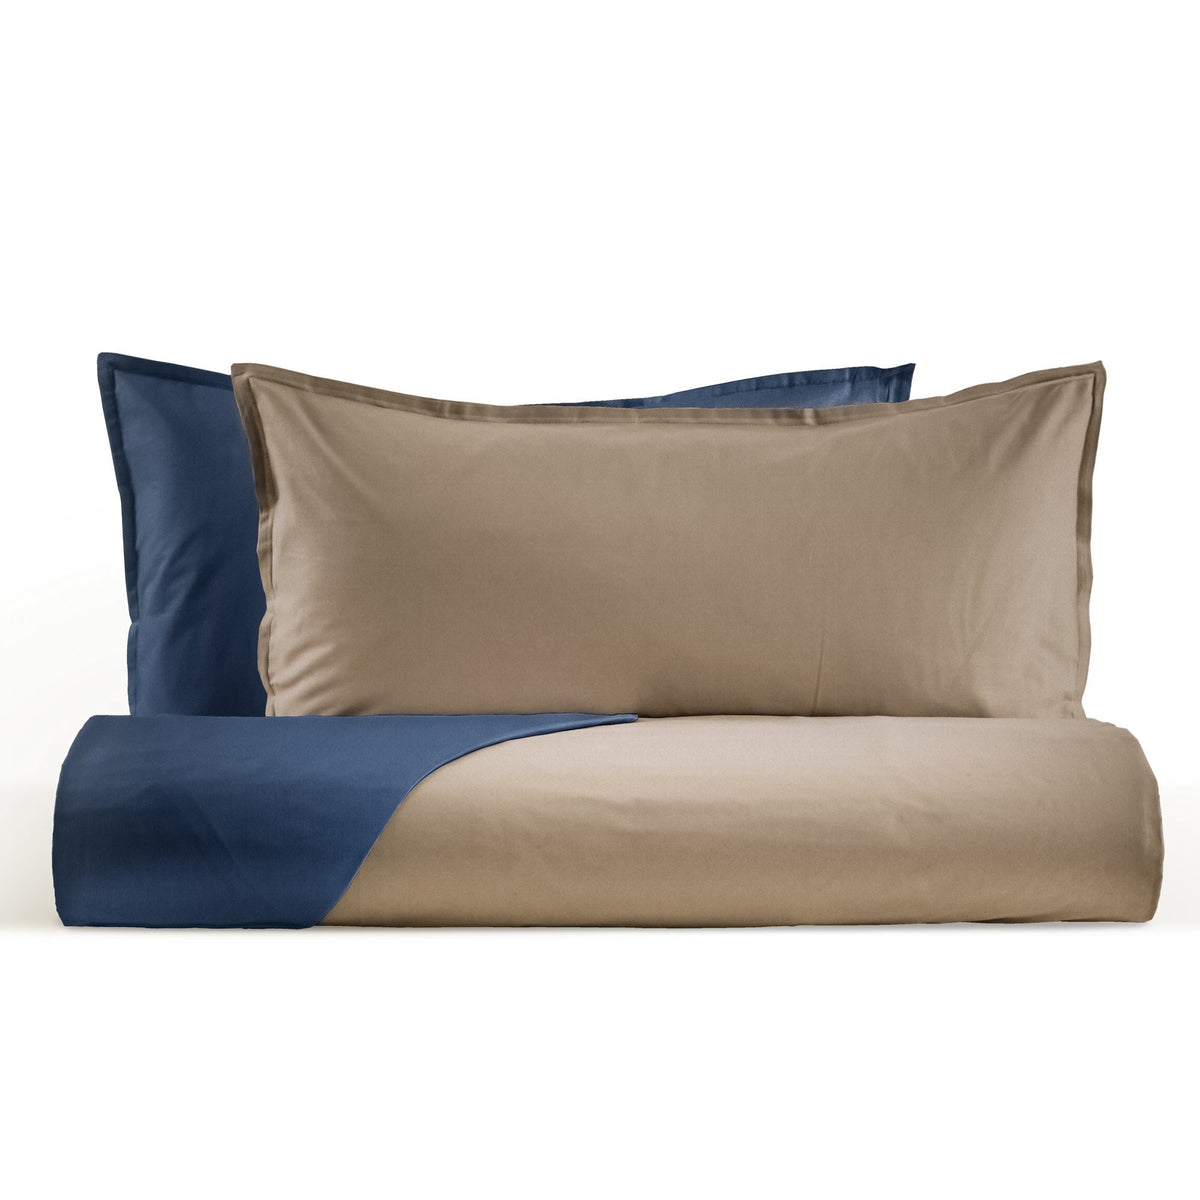 Bettbezug-Set aus doppelseitiger Baumwolle – Face